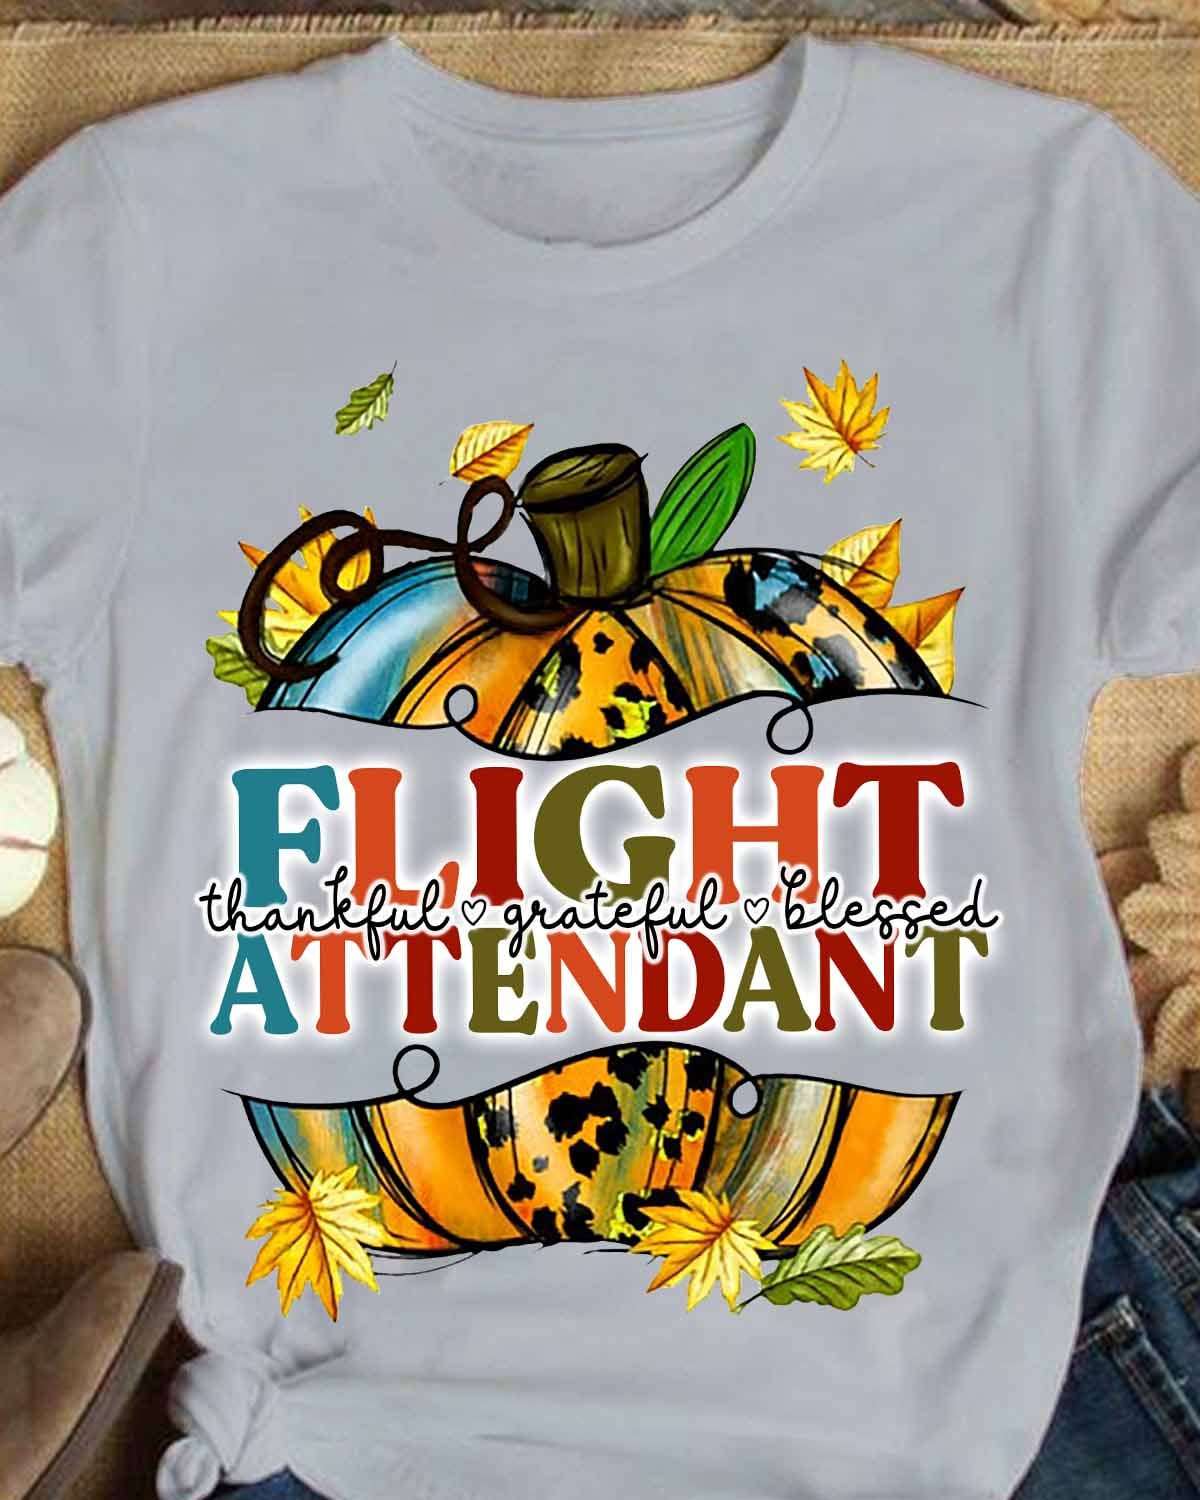 Flight attentdant - Thankful grateful blessed, flight attendant the job